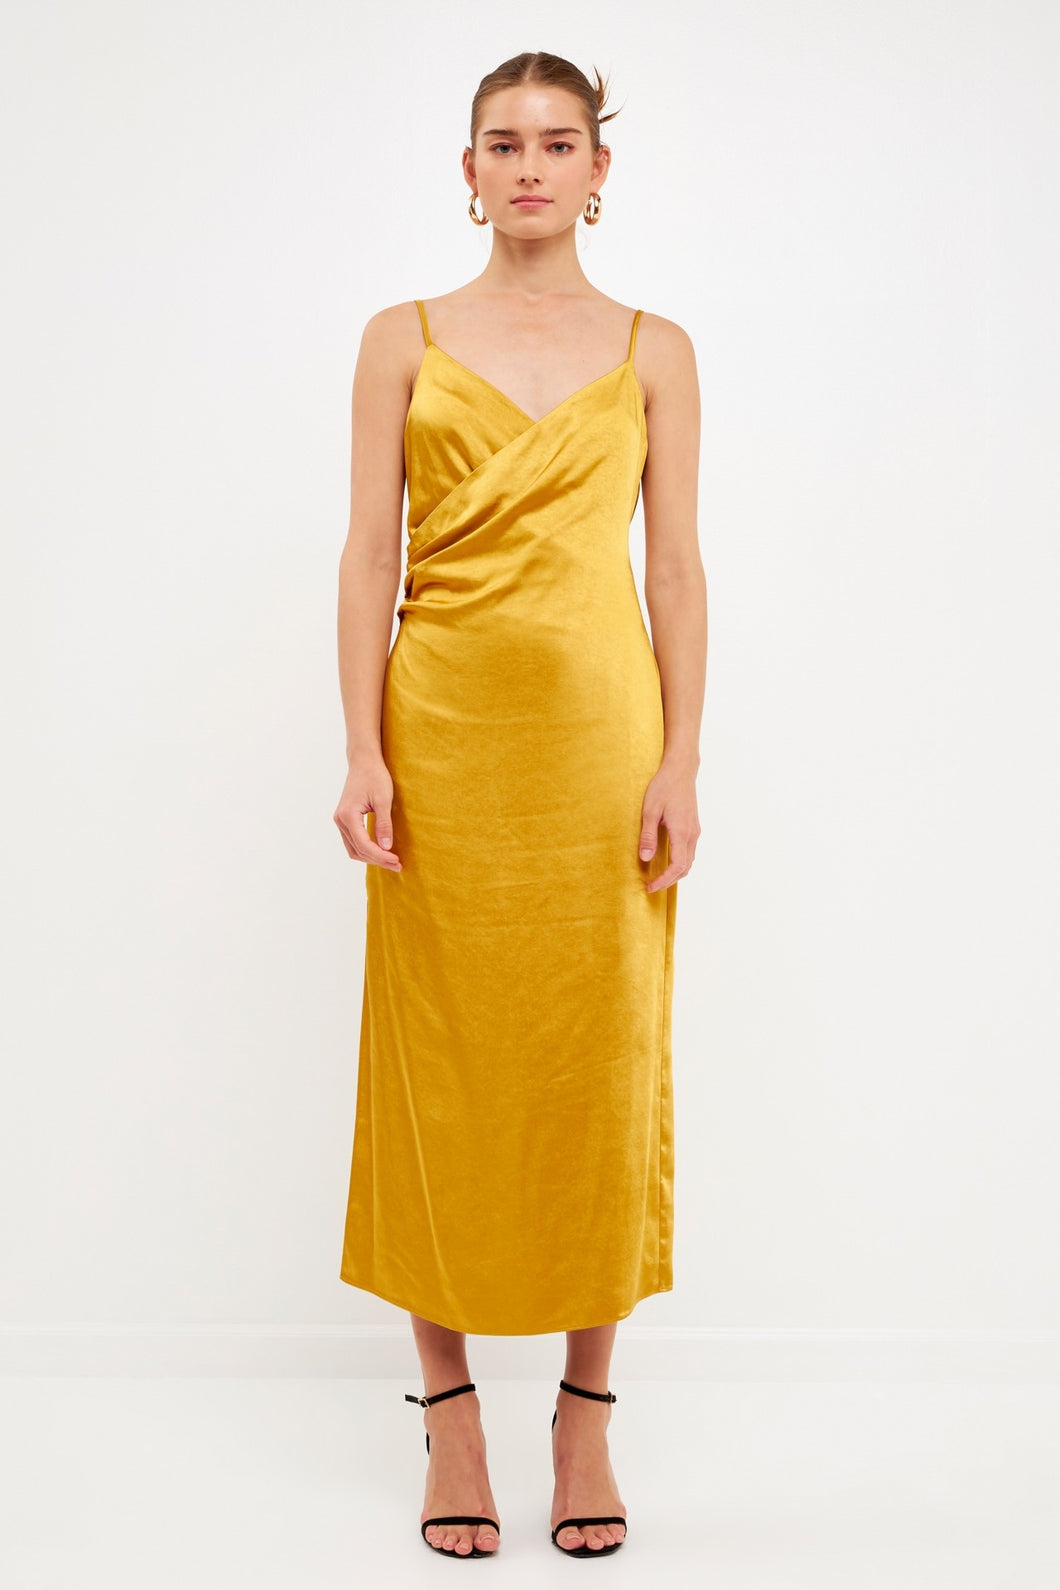 Wrap Over Satin Slip Dress - Gold